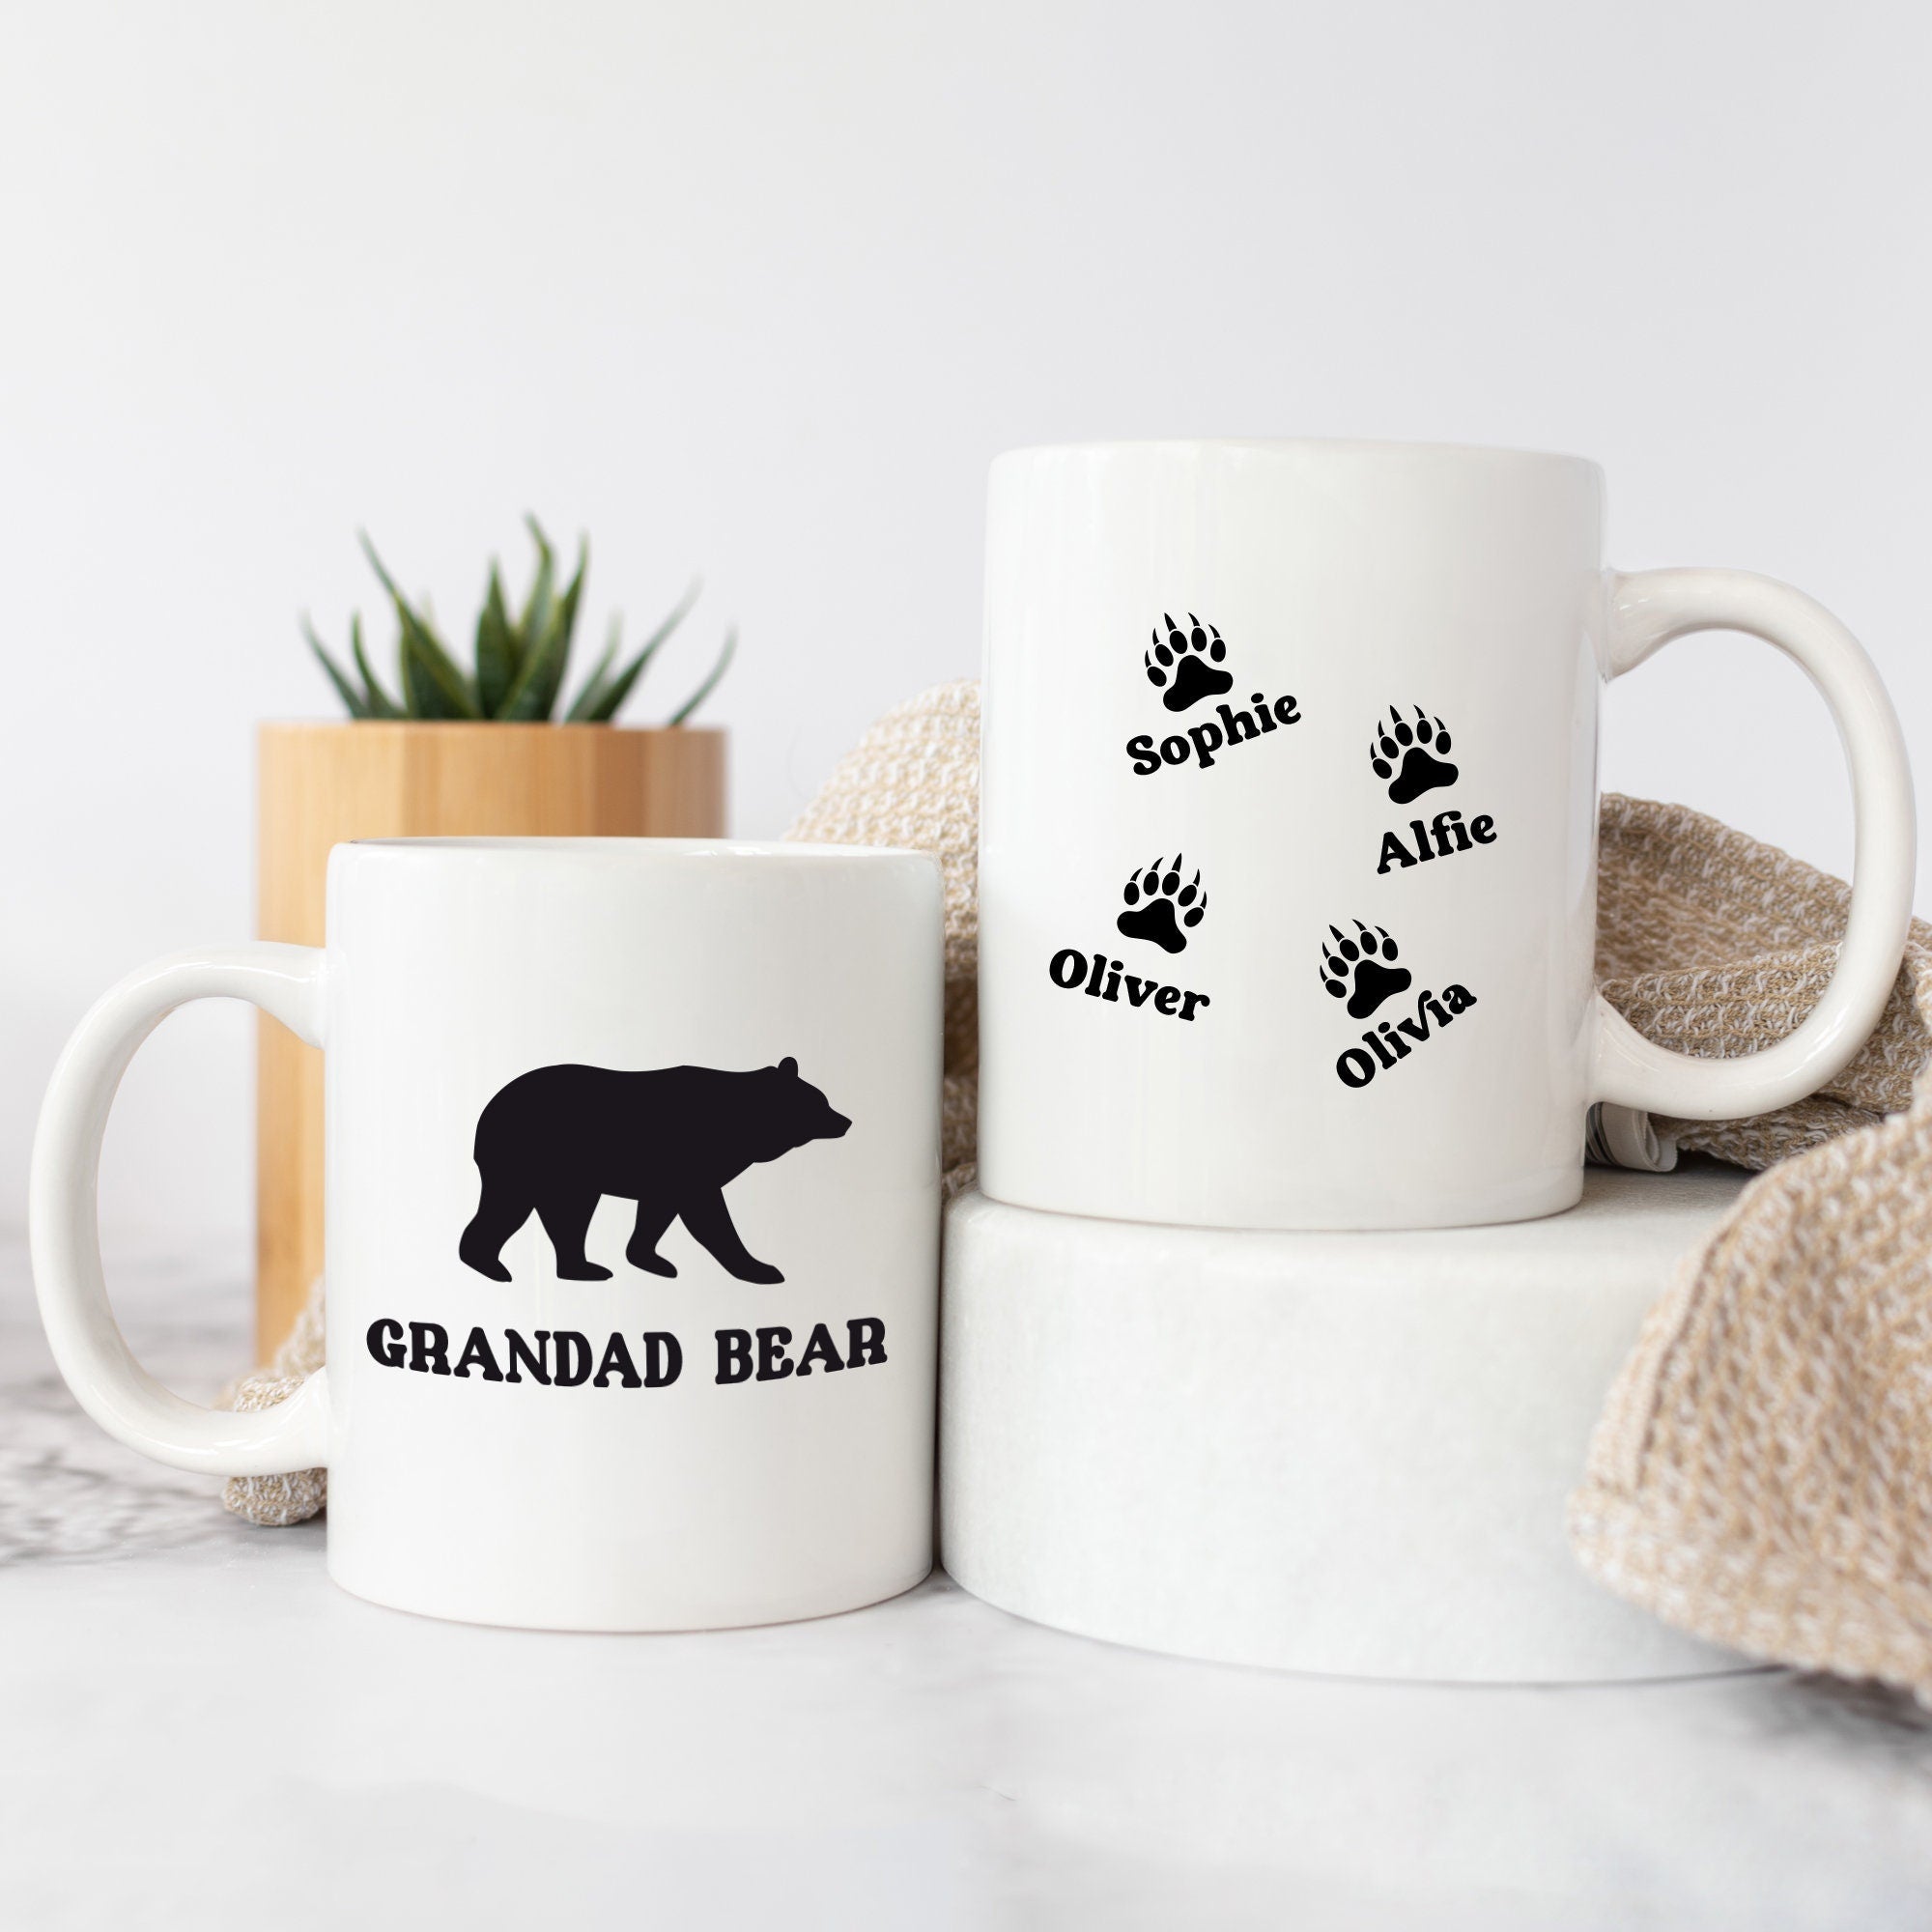 Personalised Daddy Bear Mug With Names , Gift For Dad Or Grandad, Papa Bear